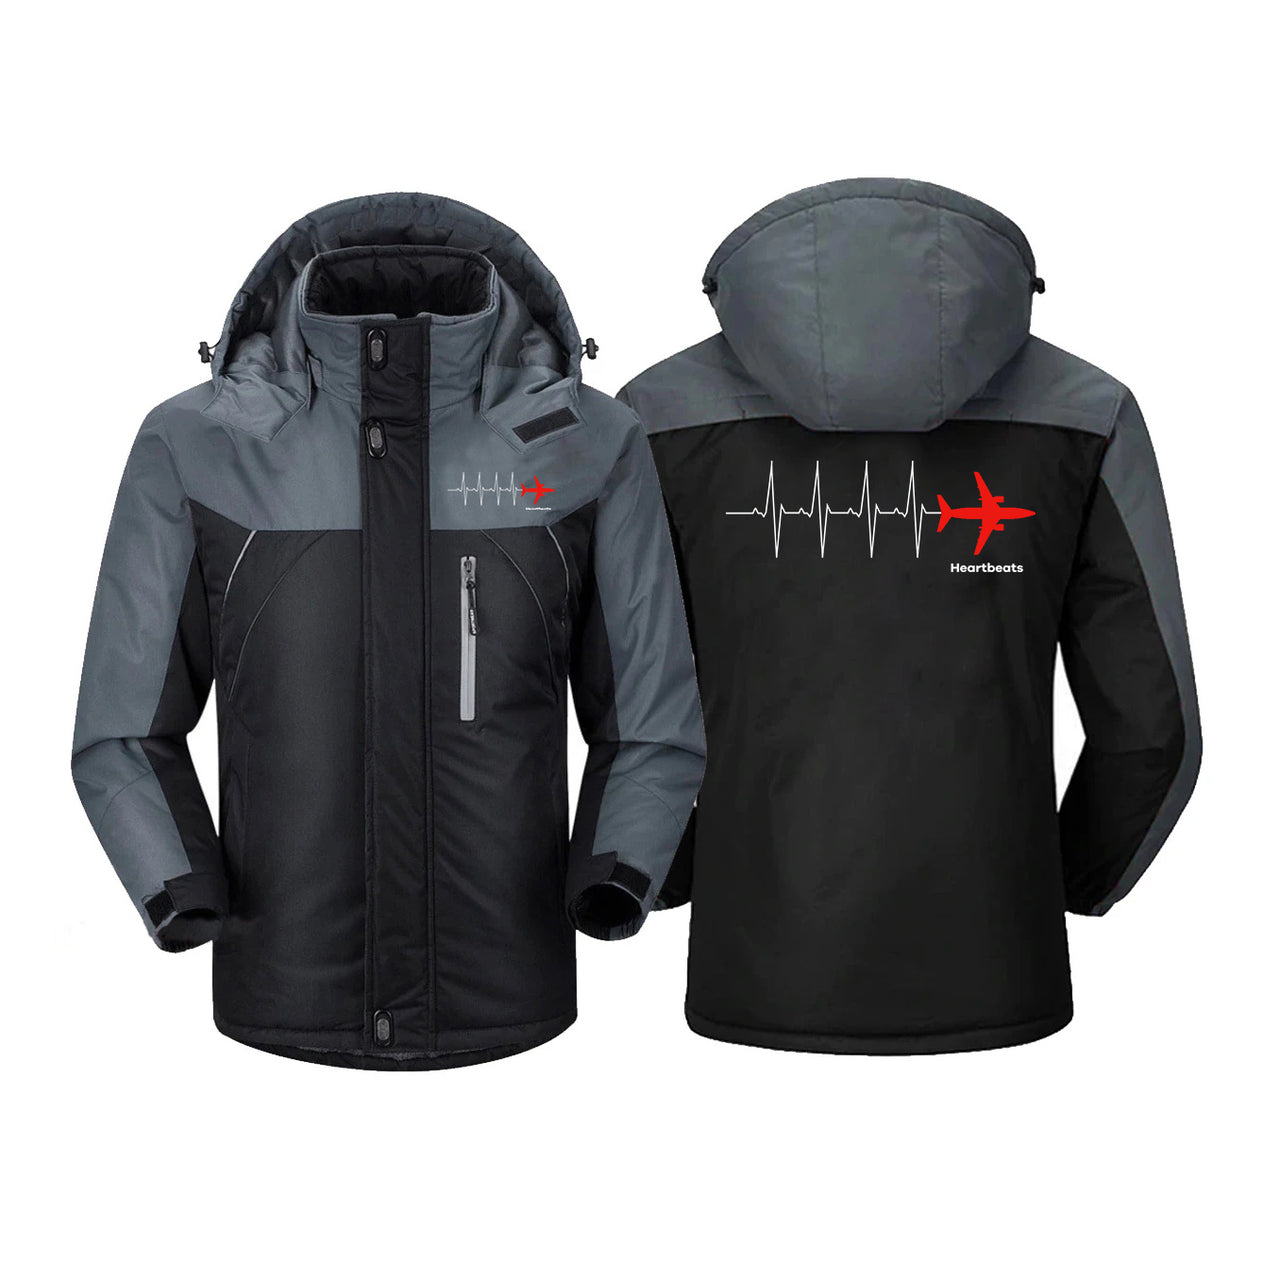 Aviation Heartbeats Designed Thick Winter Jackets